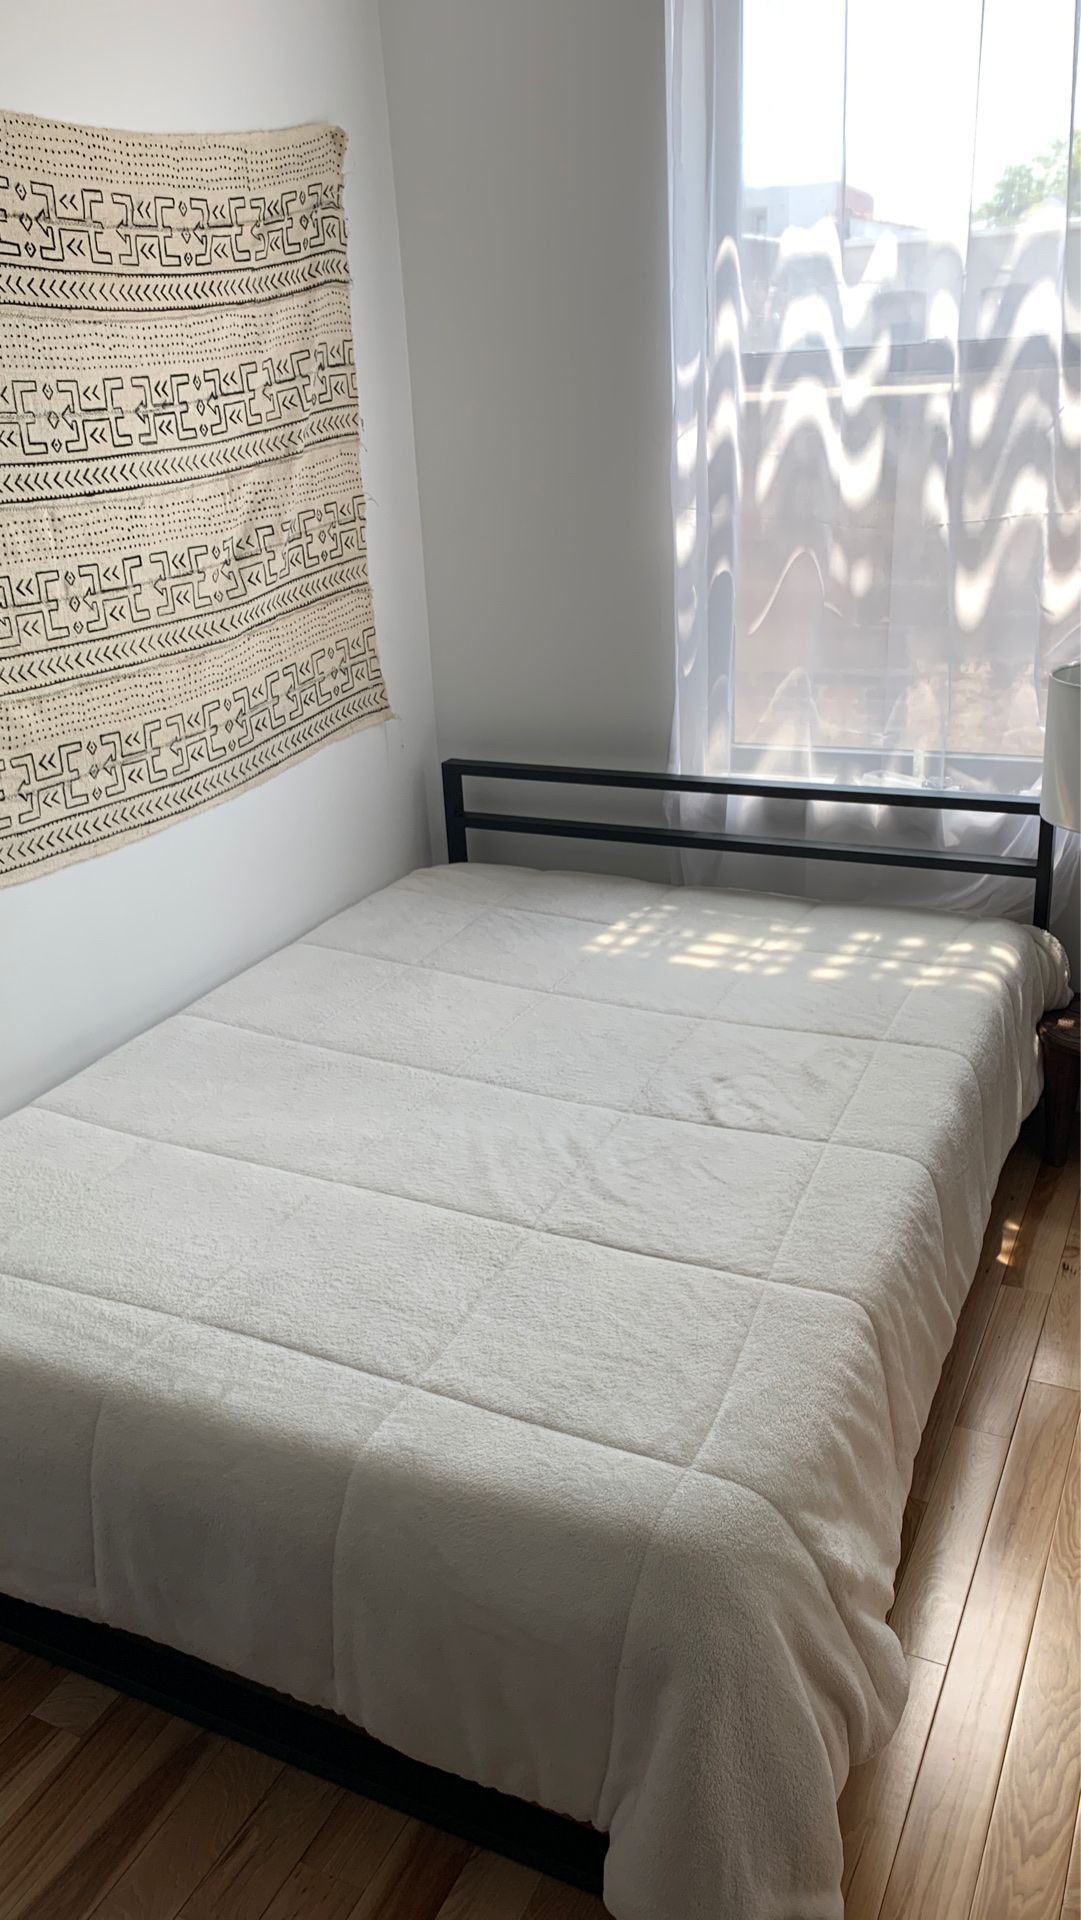 Brand new Full size Zinus bed frame & mattress